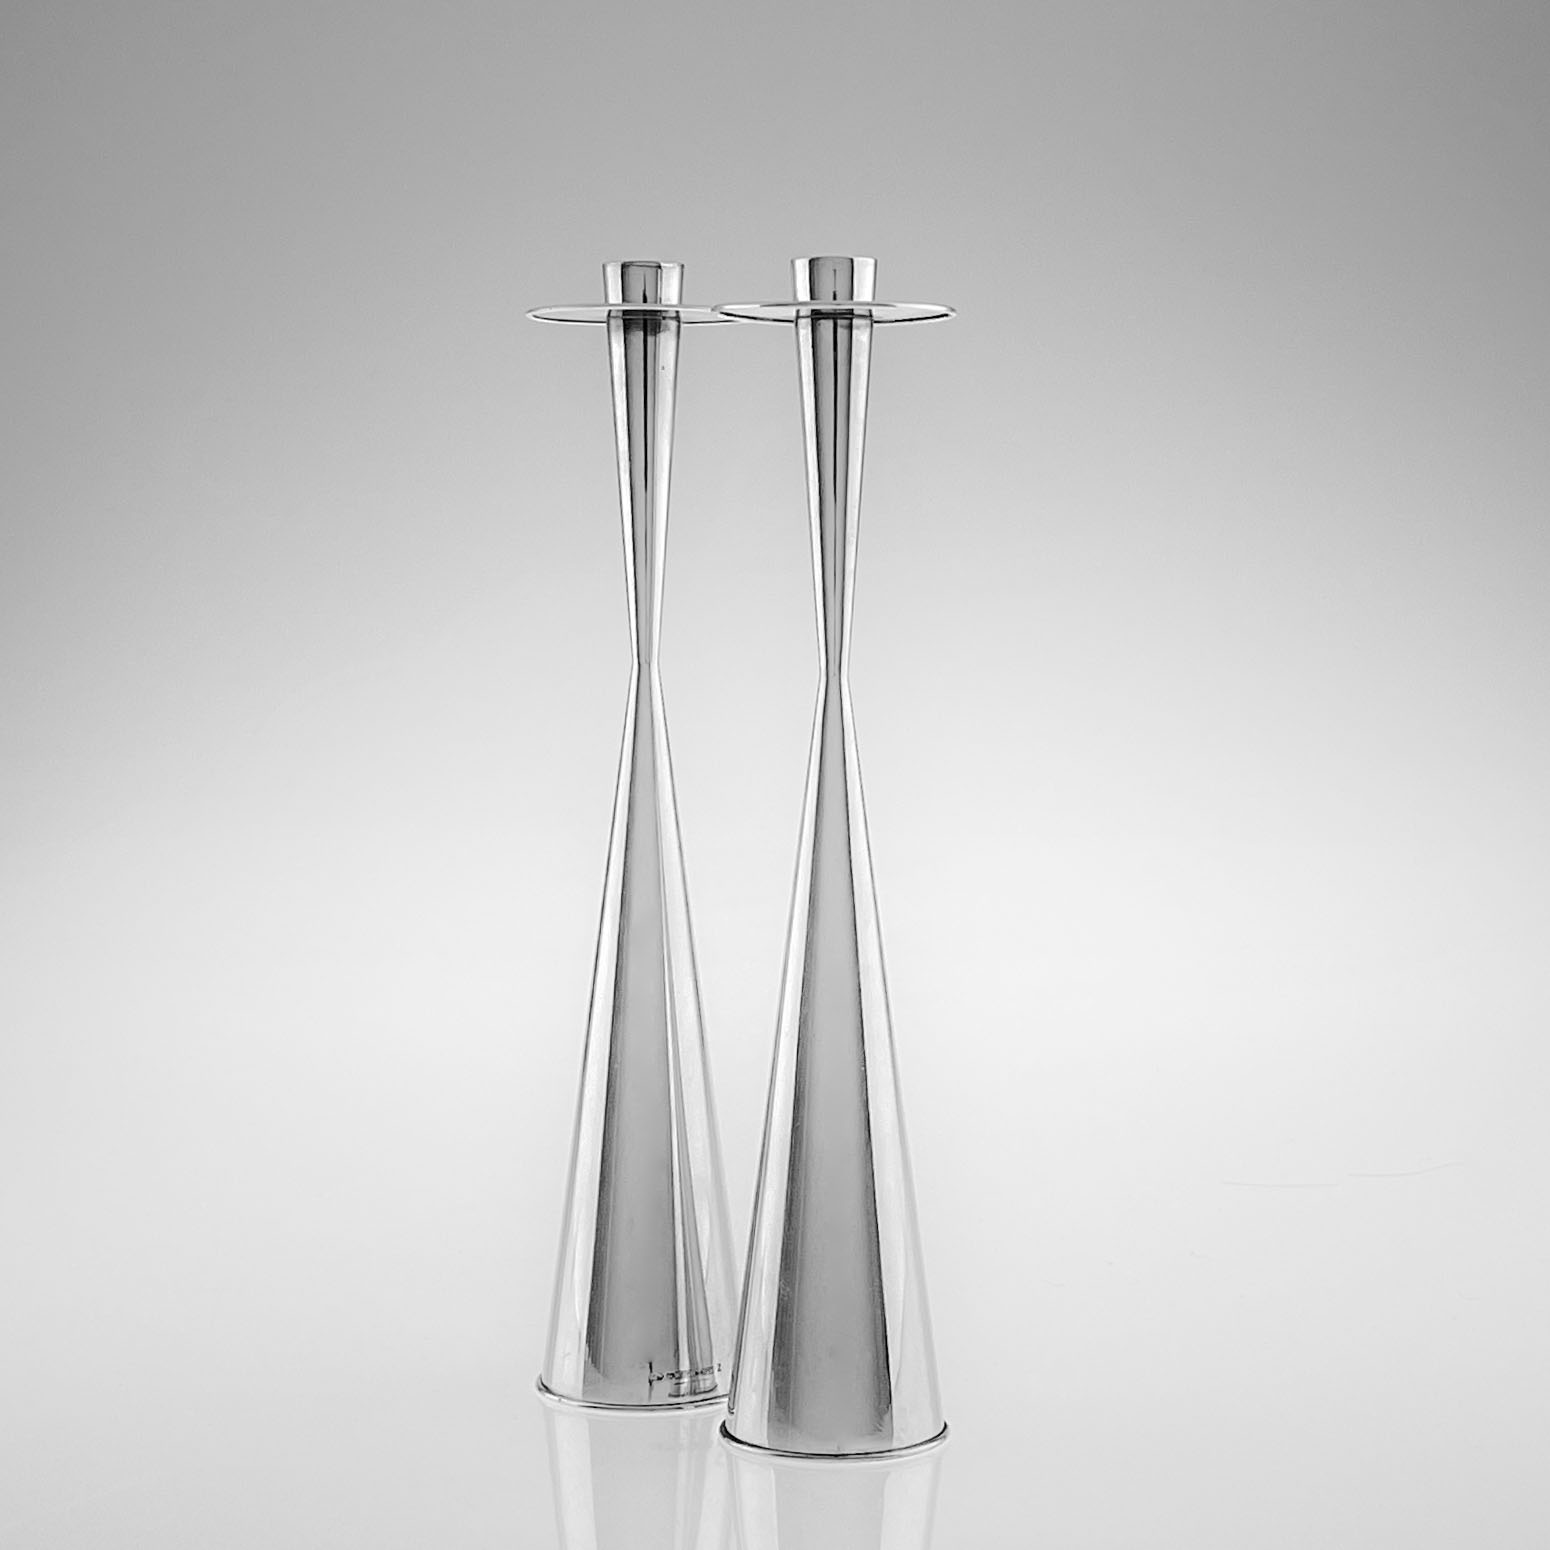 Tapio Wirkkala - A pair of Scandinavian Modern silver candlesticks, model TW 189 - Kultakeskus, Finland 1964 & 1965